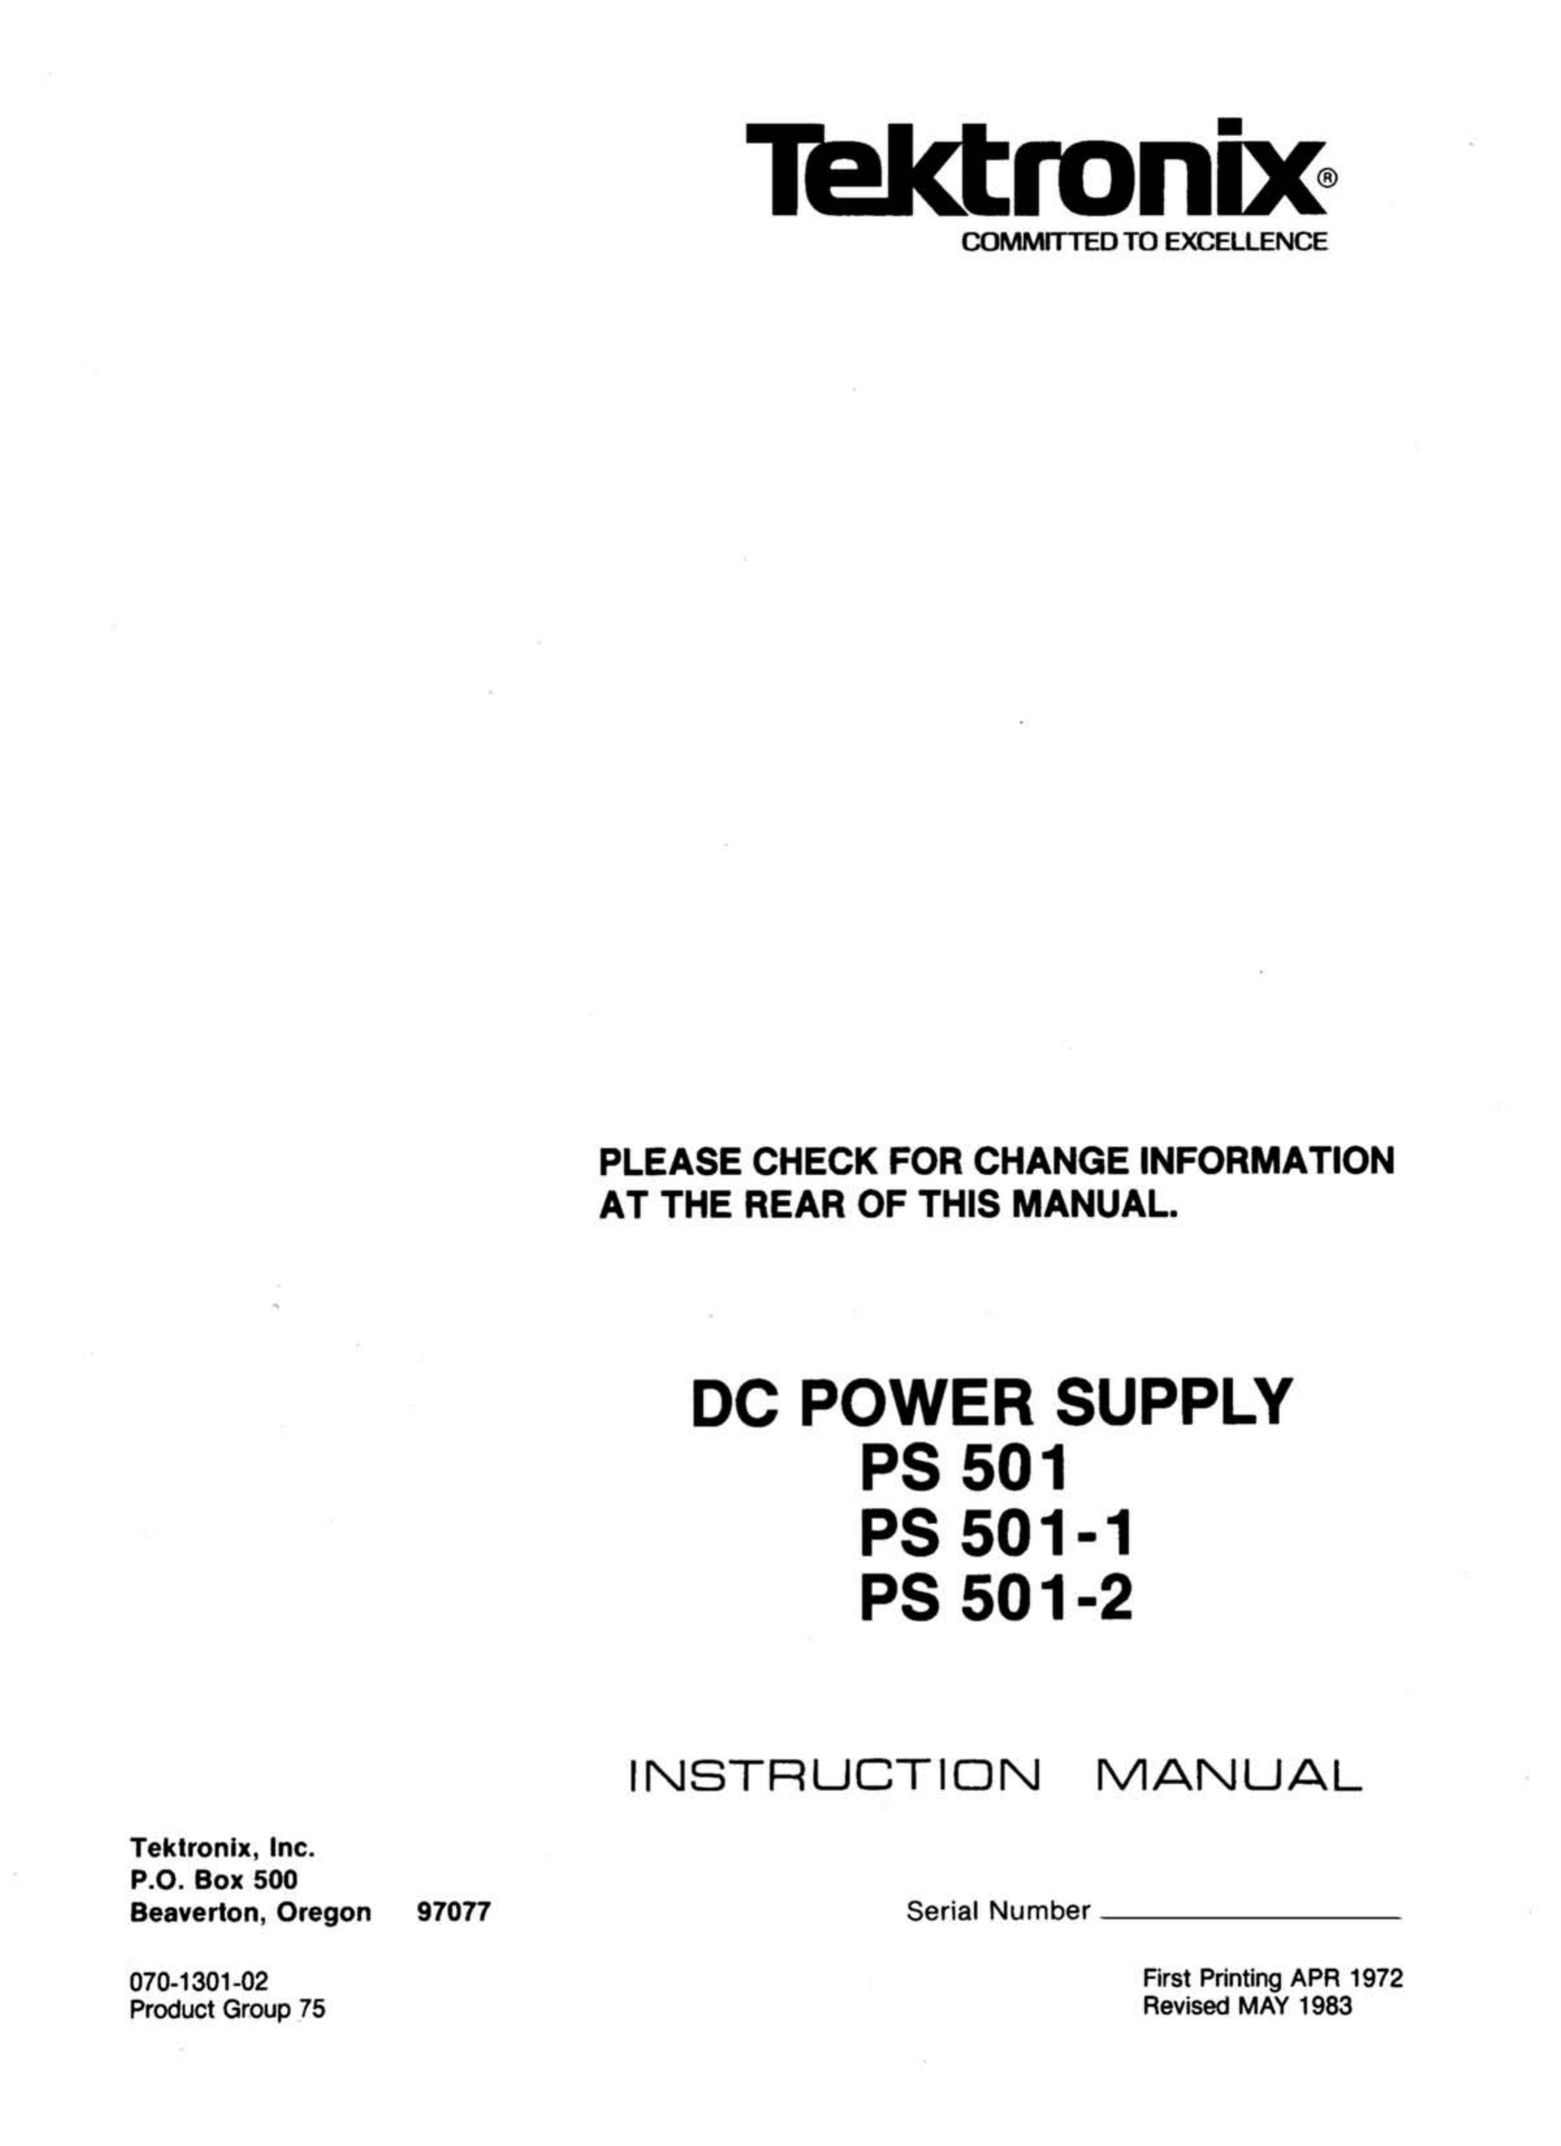 Tektronix ps 501 Power Supply User Manual